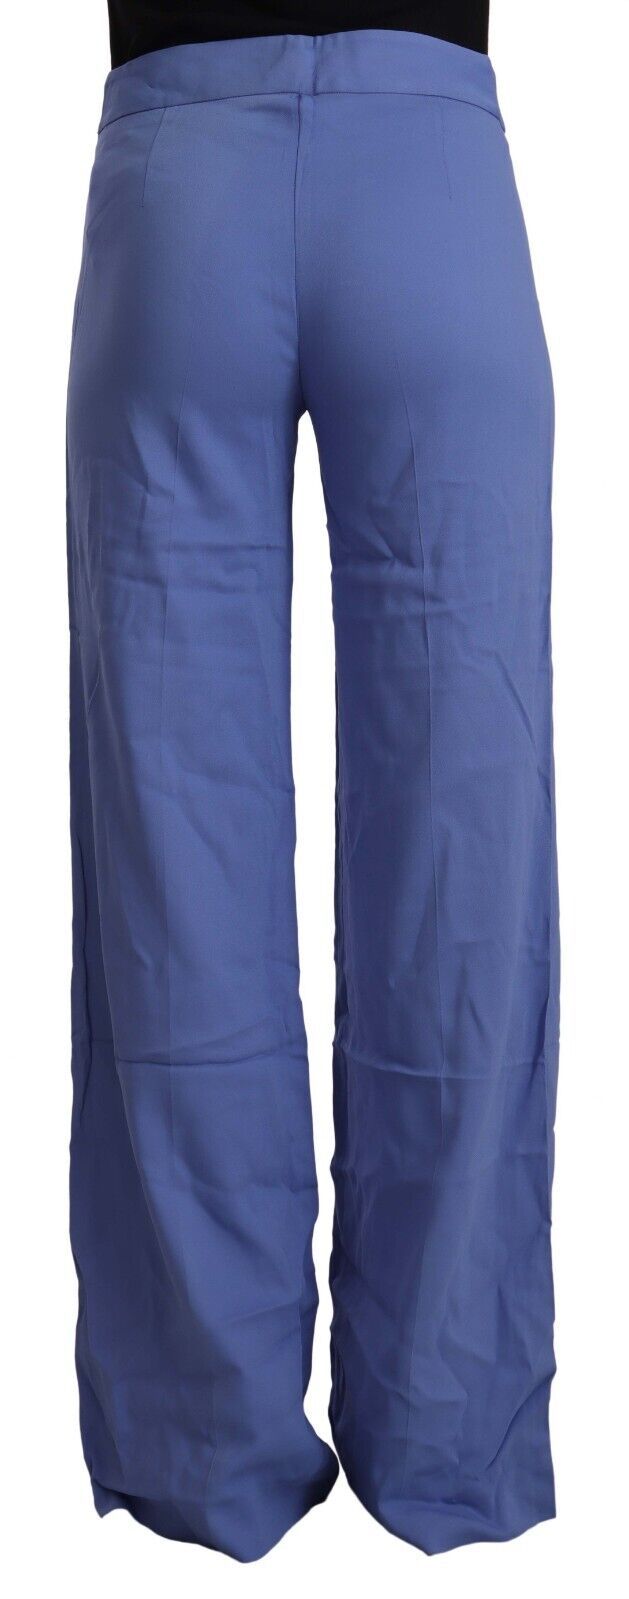 P.A.R.O.S.H. Chic Wide-Leg High Waist Blue Women's Trousers